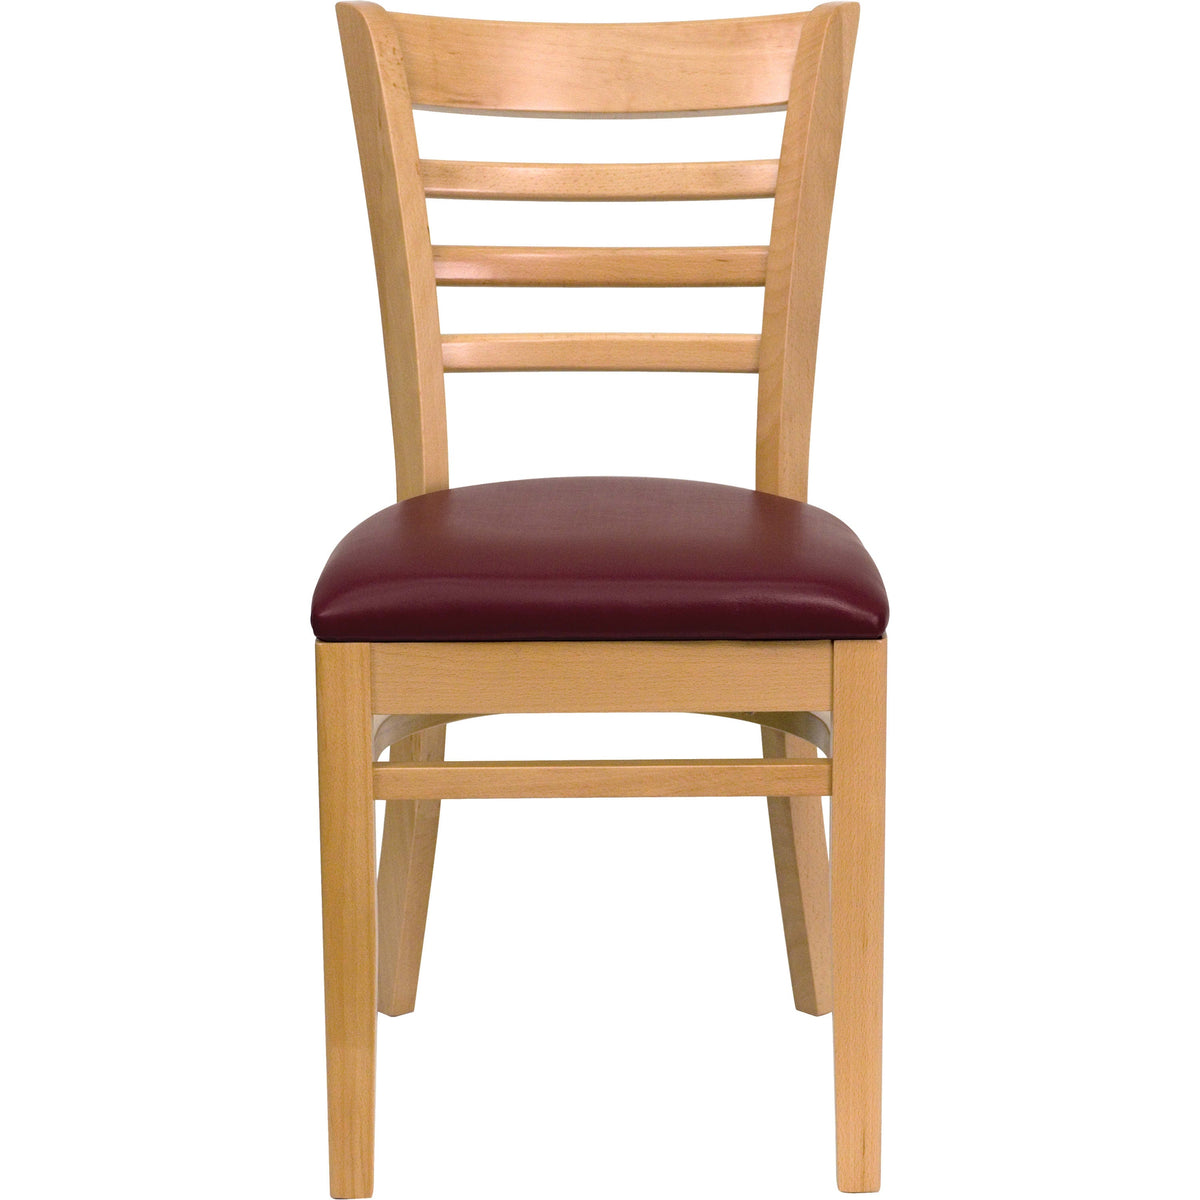 Burgundy Vinyl Seat/Natural Wood Frame |#| Ladder Back Natural Wood Restaurant Chair - Burgundy Vinyl Seat